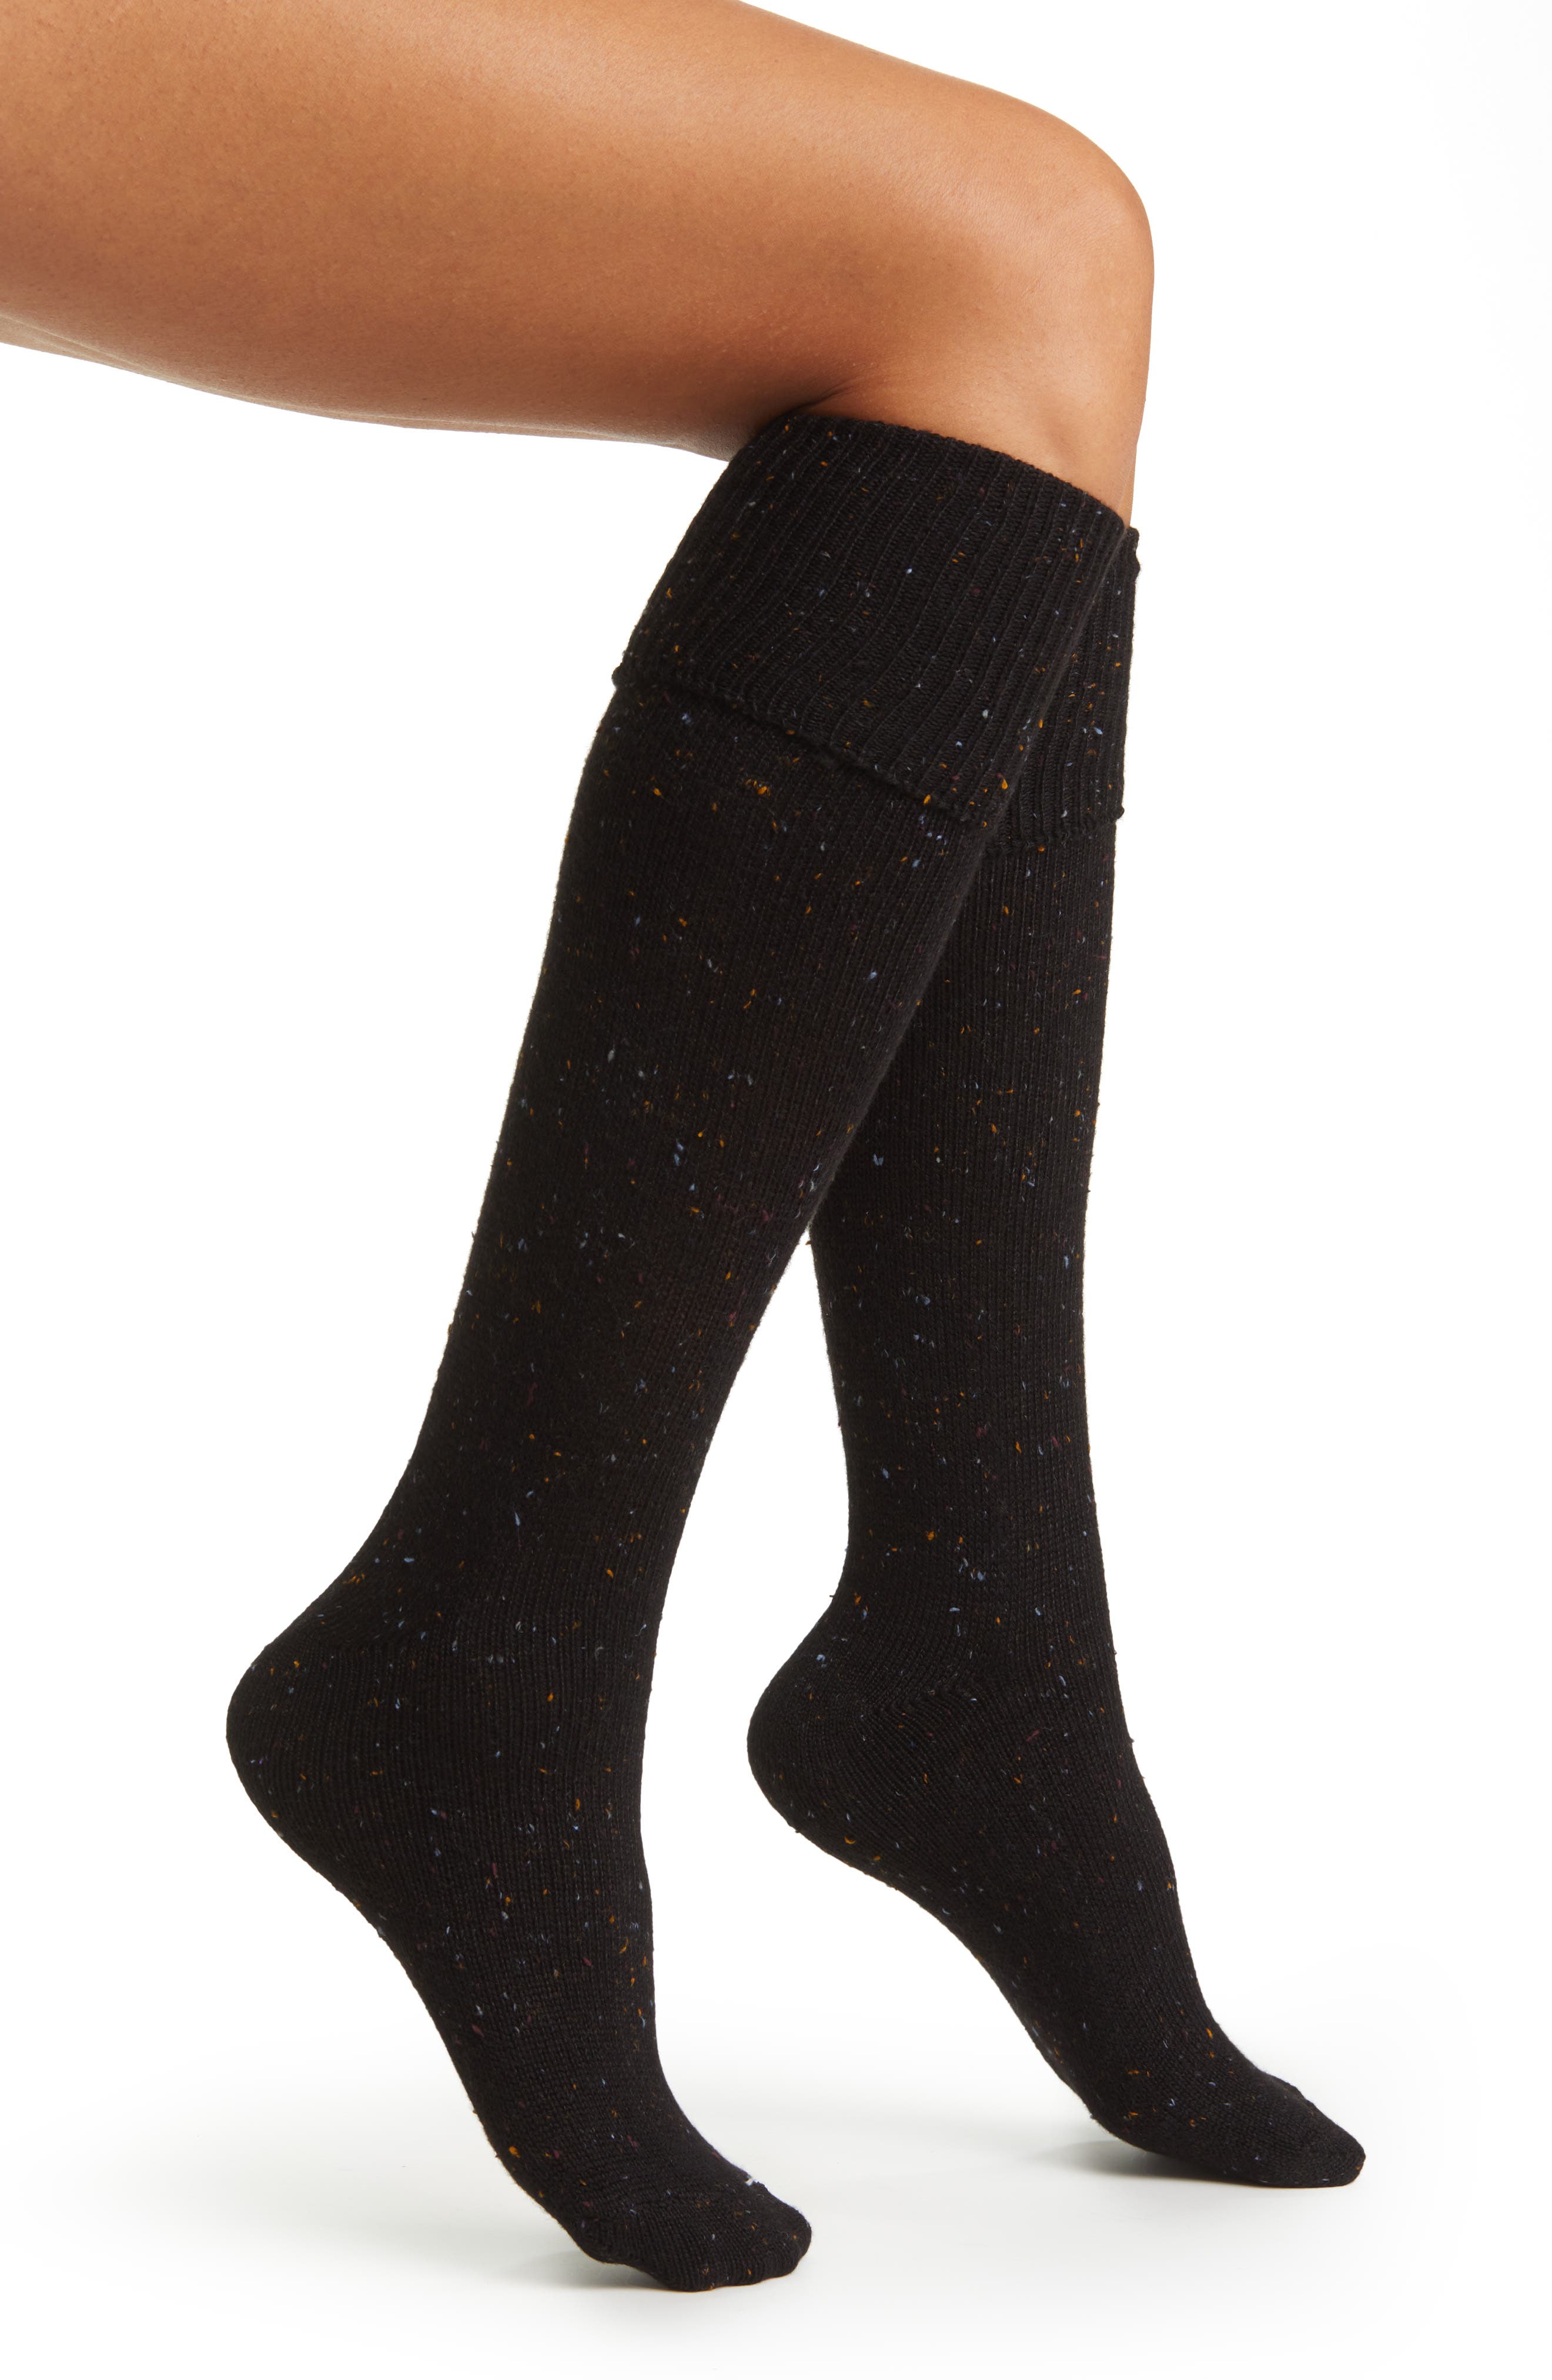 Women's Hue Cotton Blend Ankle Socks Medium Multi 10 Pair #657R 